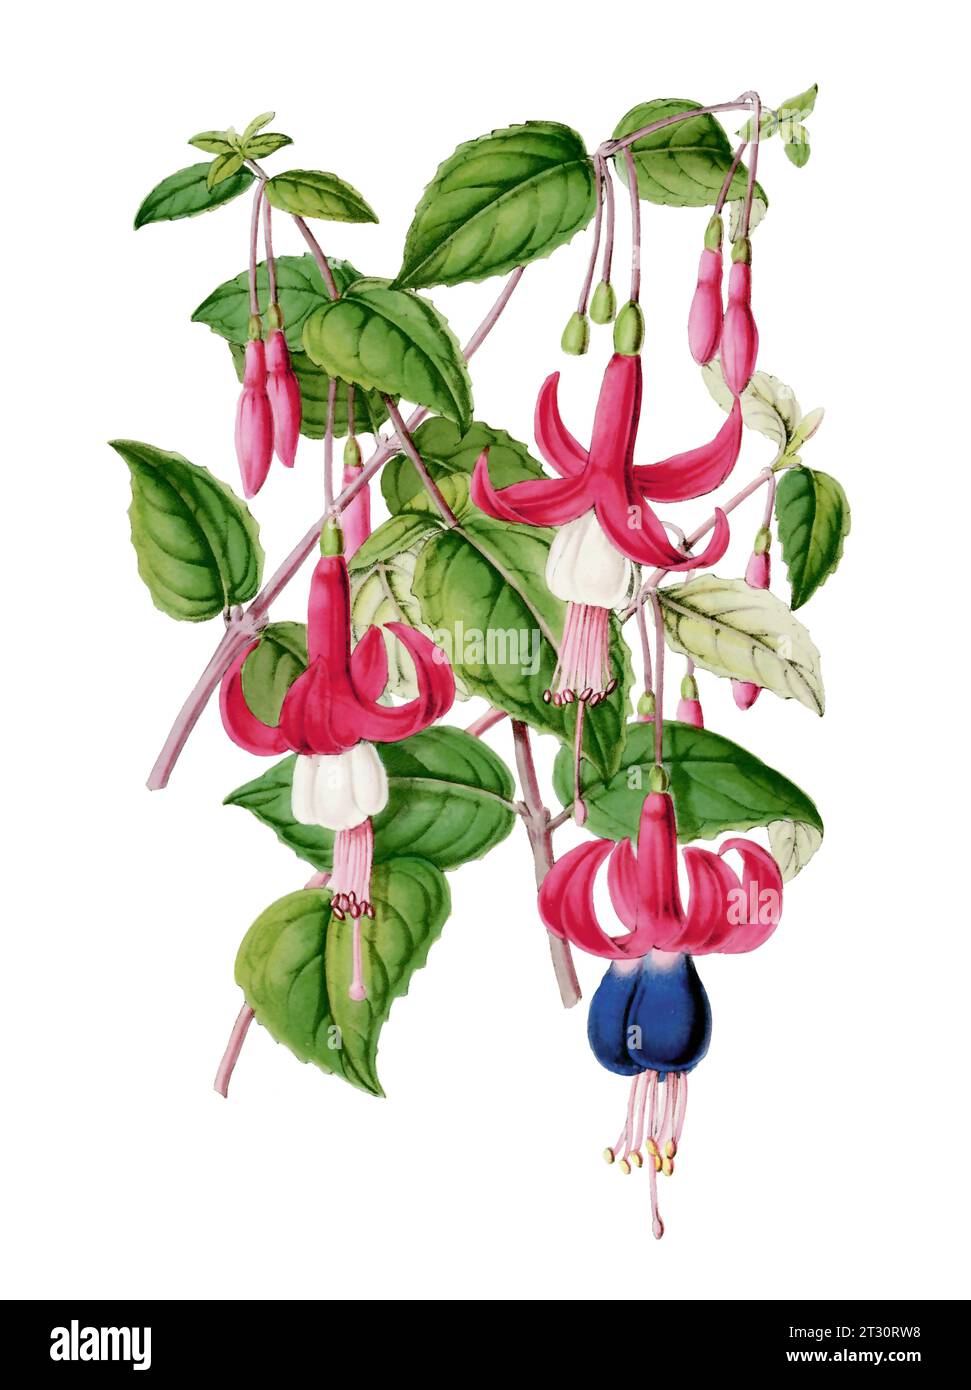 Colorful Flower Illustration: digital vintage-style Fuchsia Flowers on a plain white background. Stock Photo